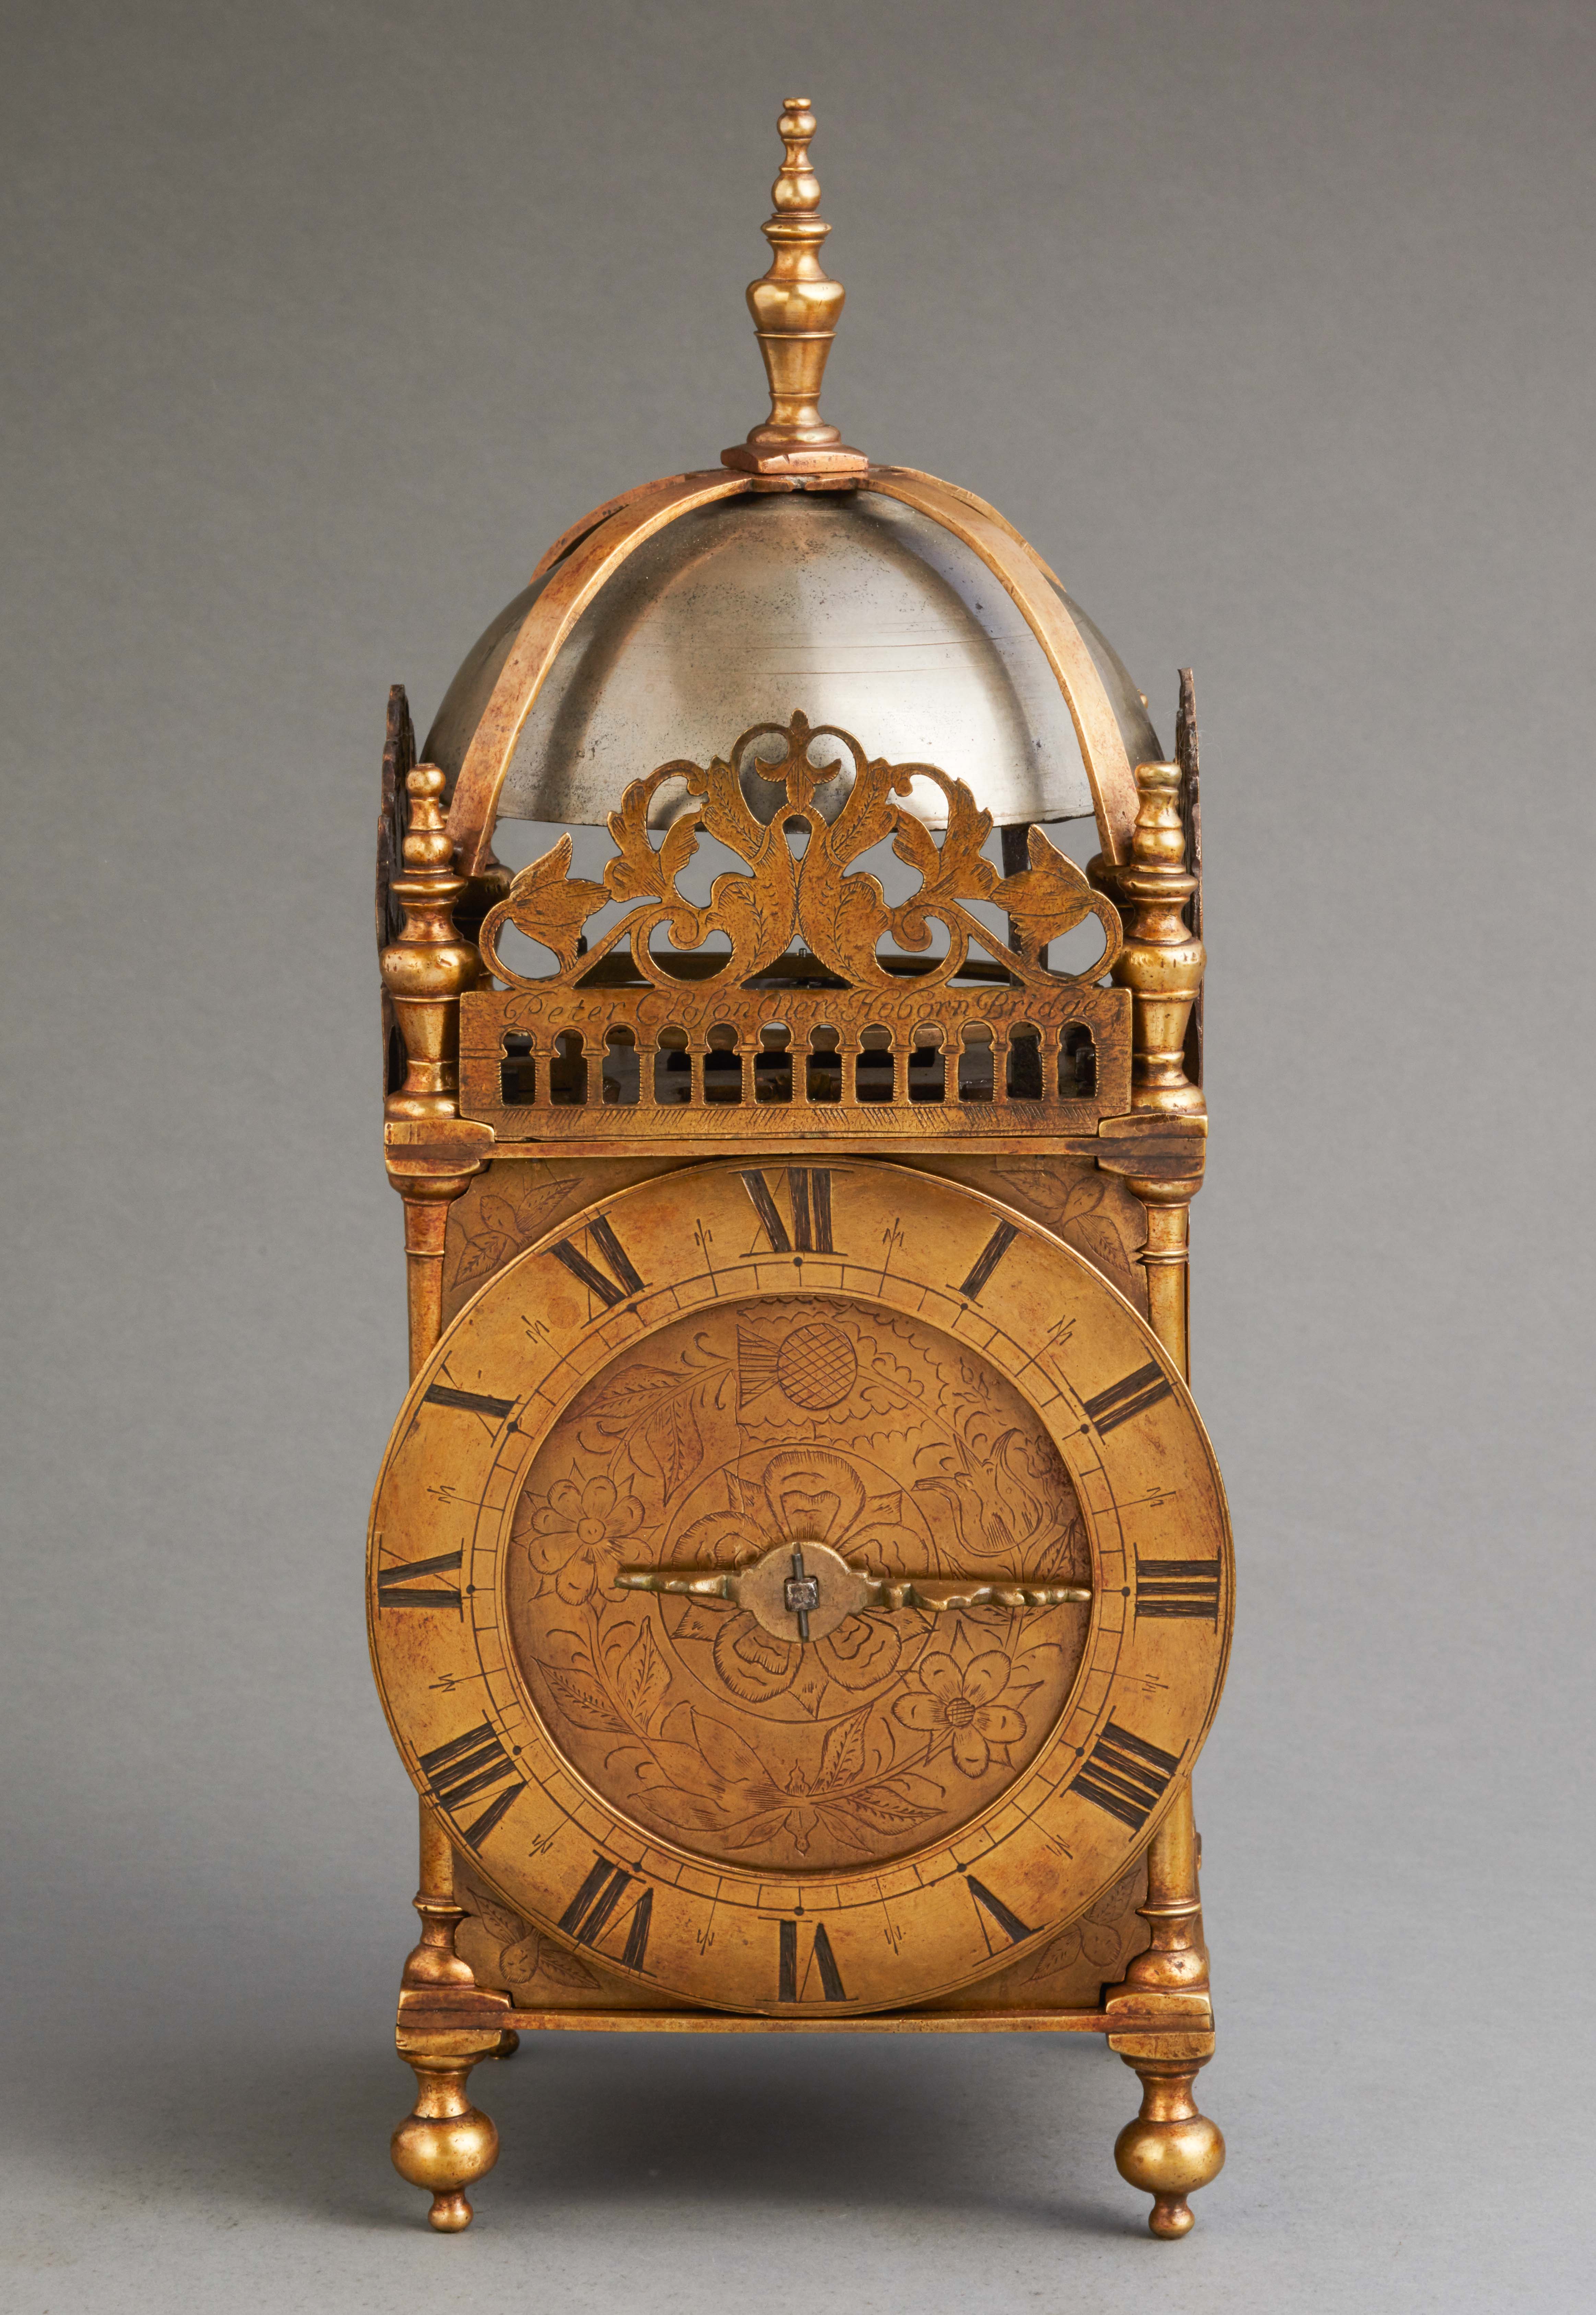 English 17th century lantern clock, circa 1640